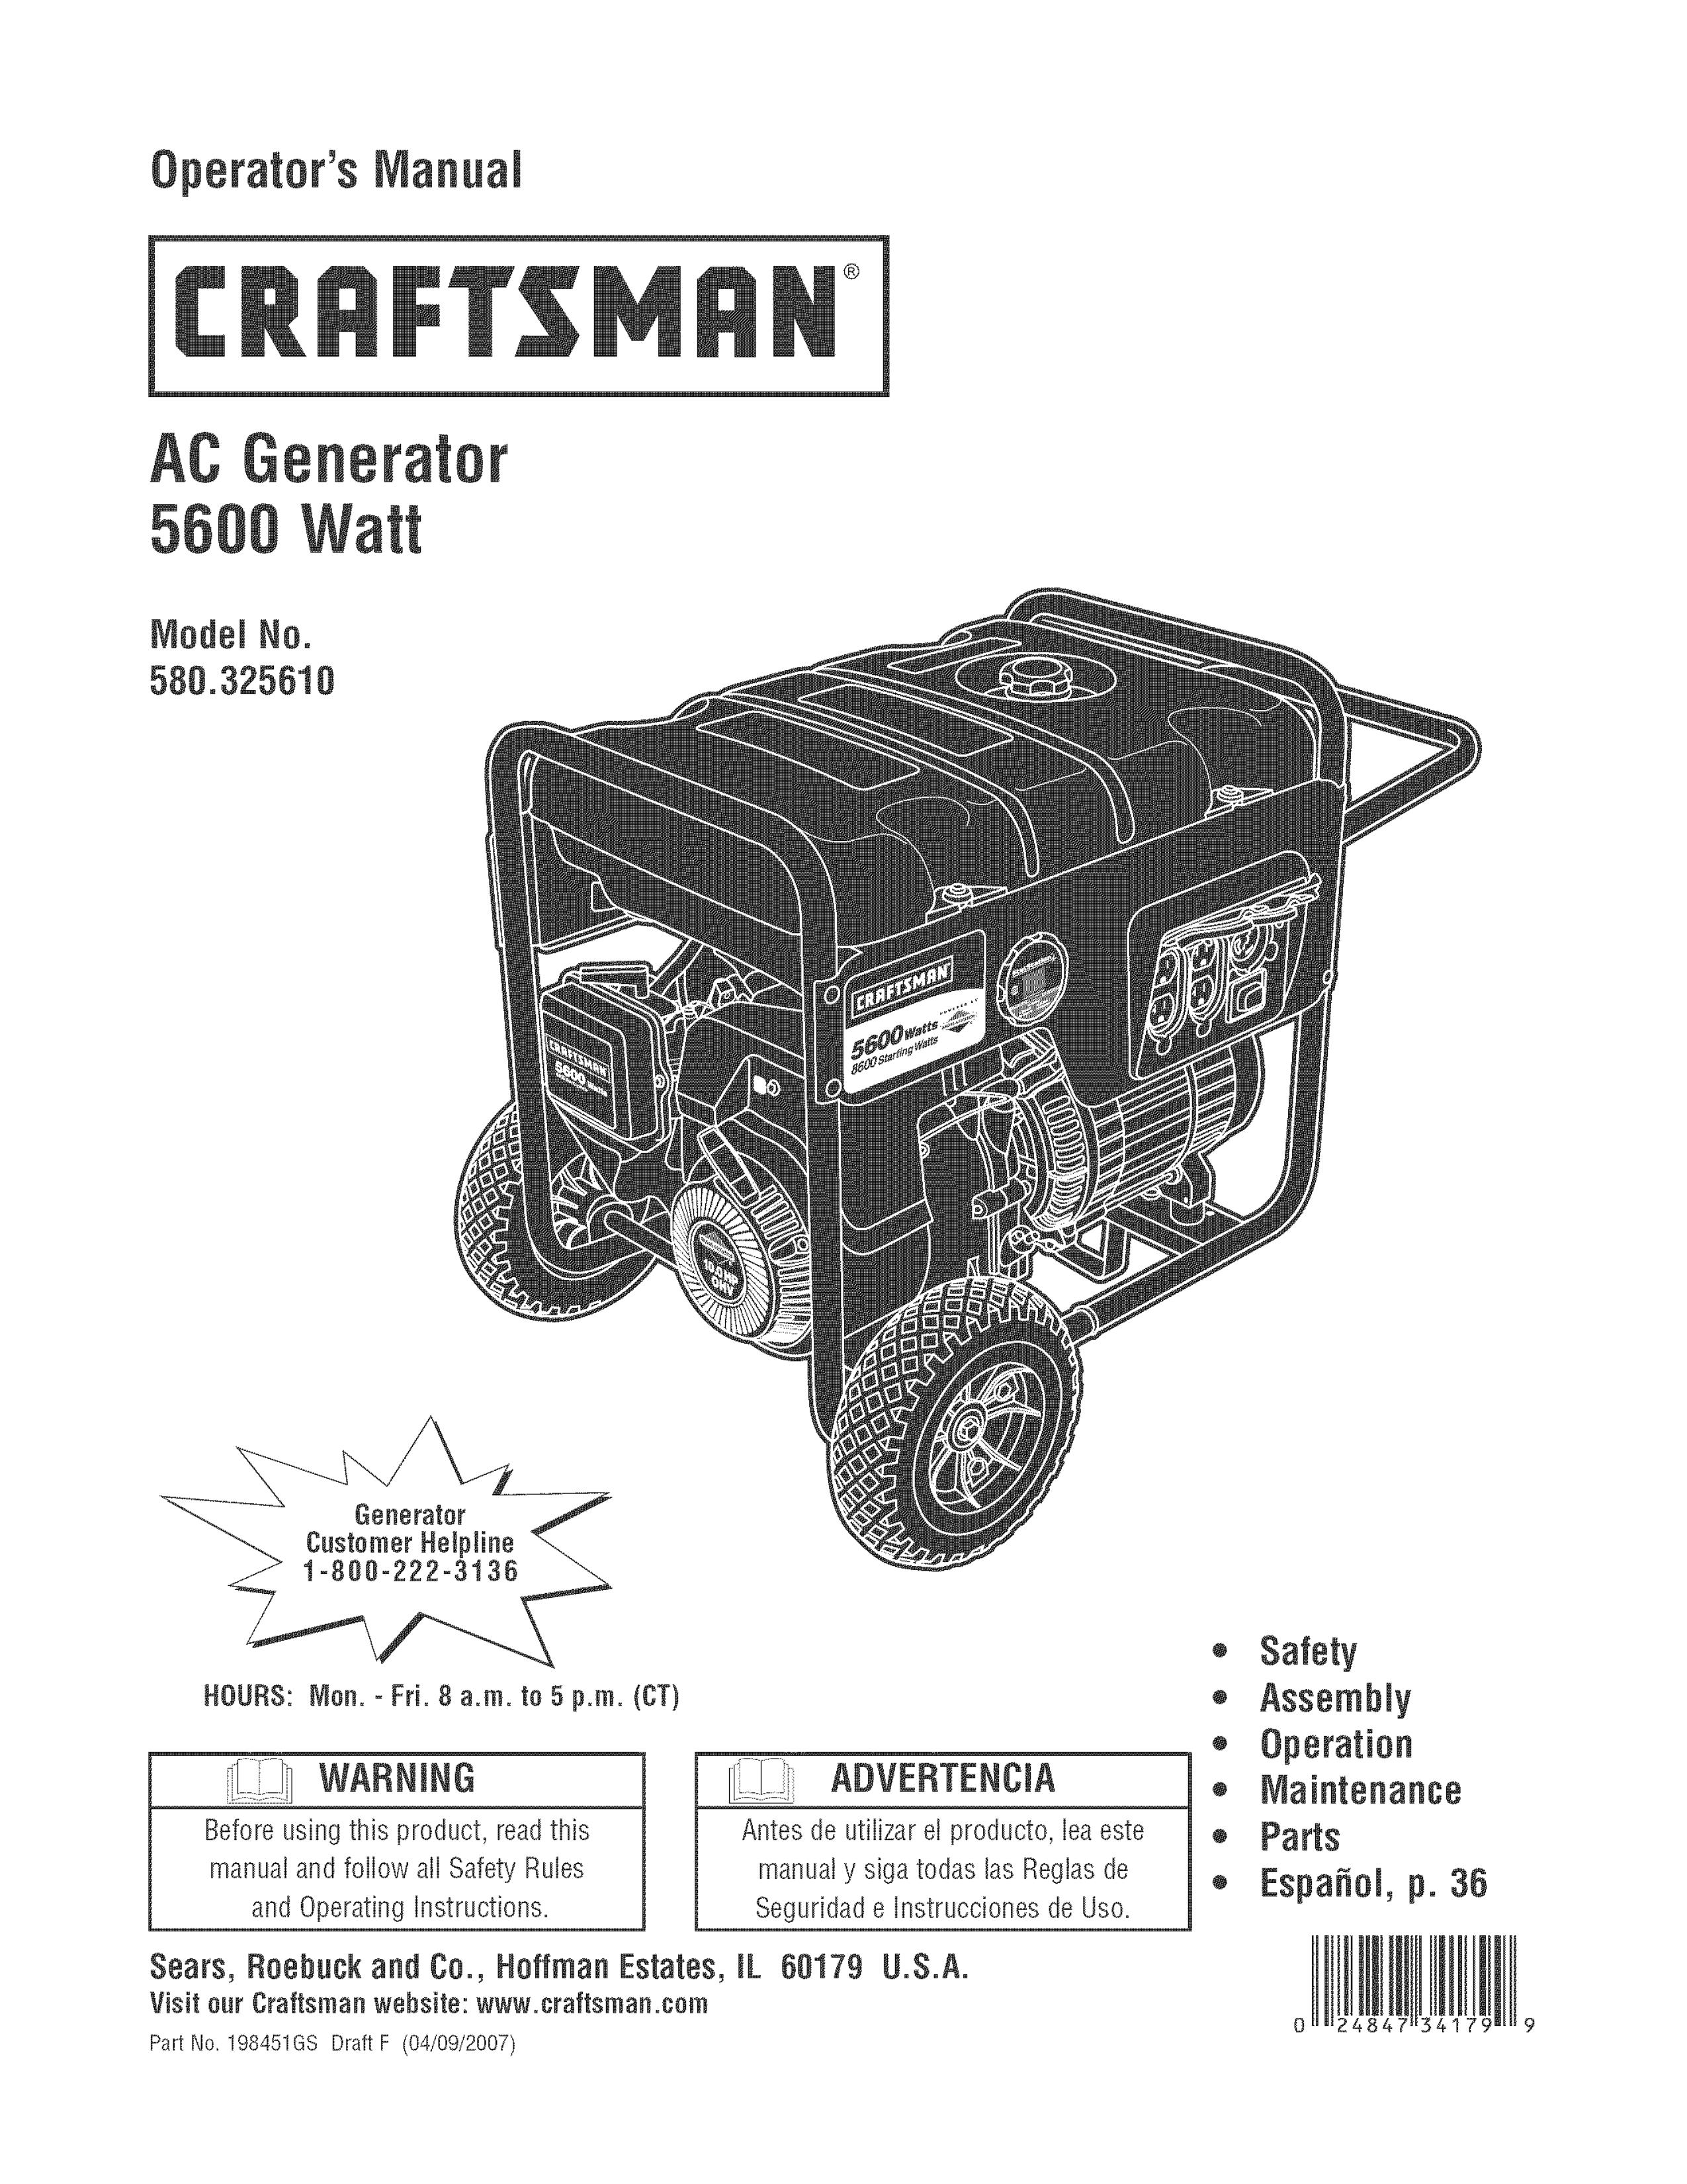 Craftsman 580.32561 Portable Generator User Manual